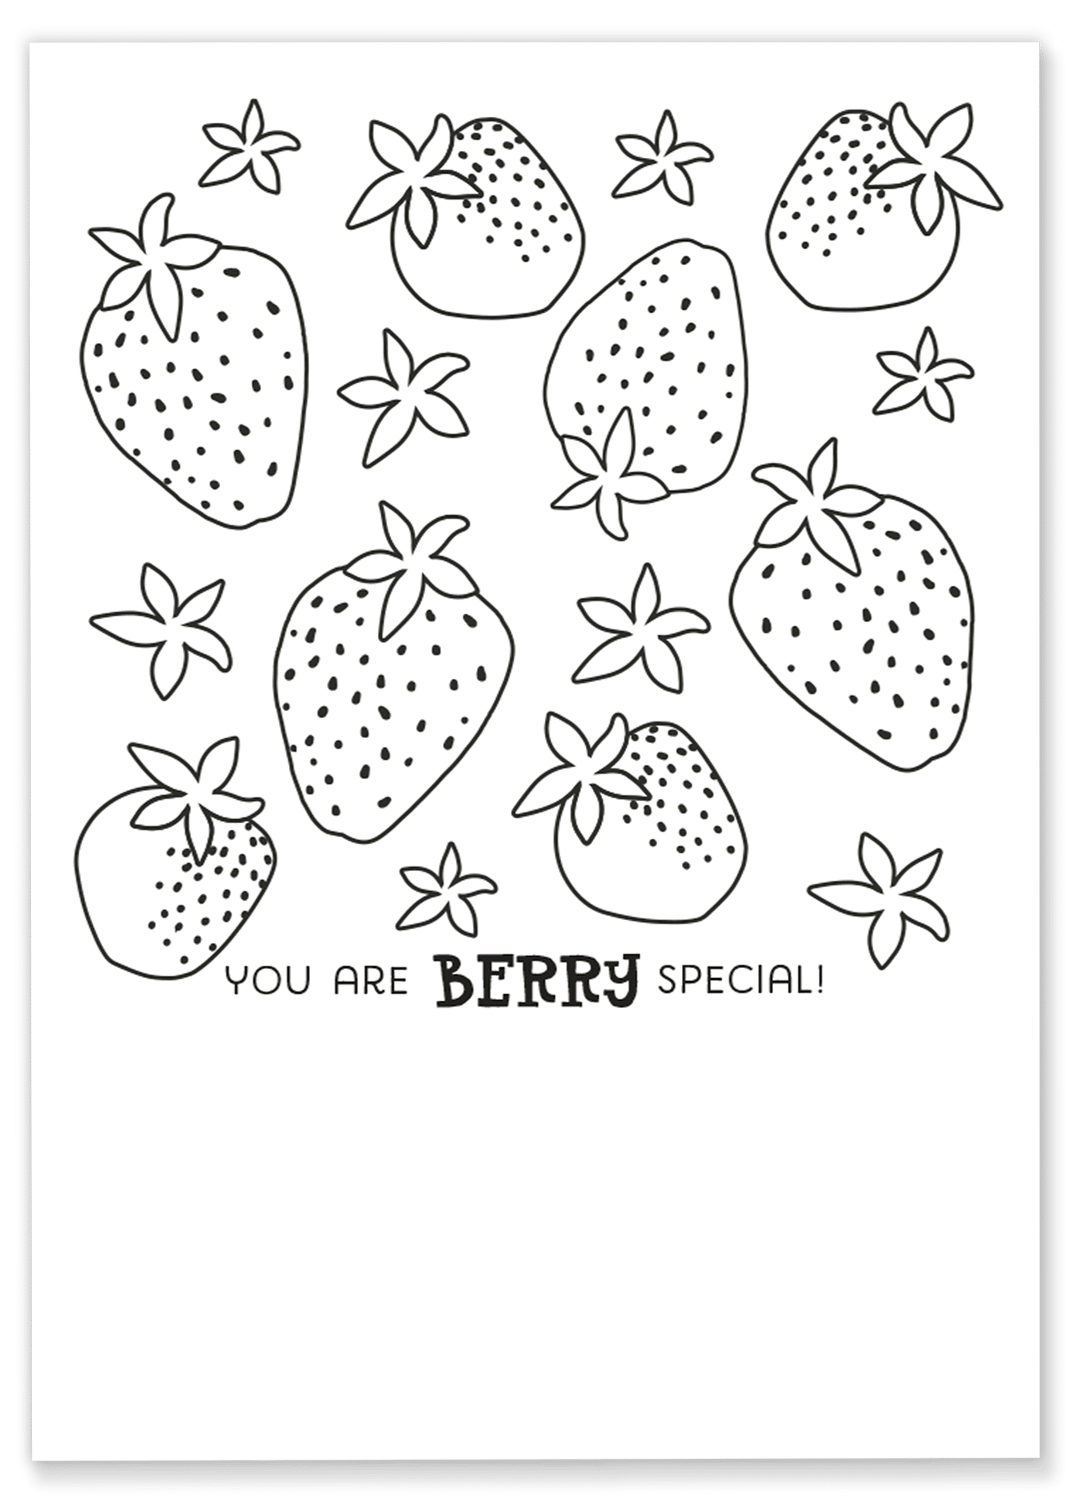 Strawberry coloring sheet â gilm press